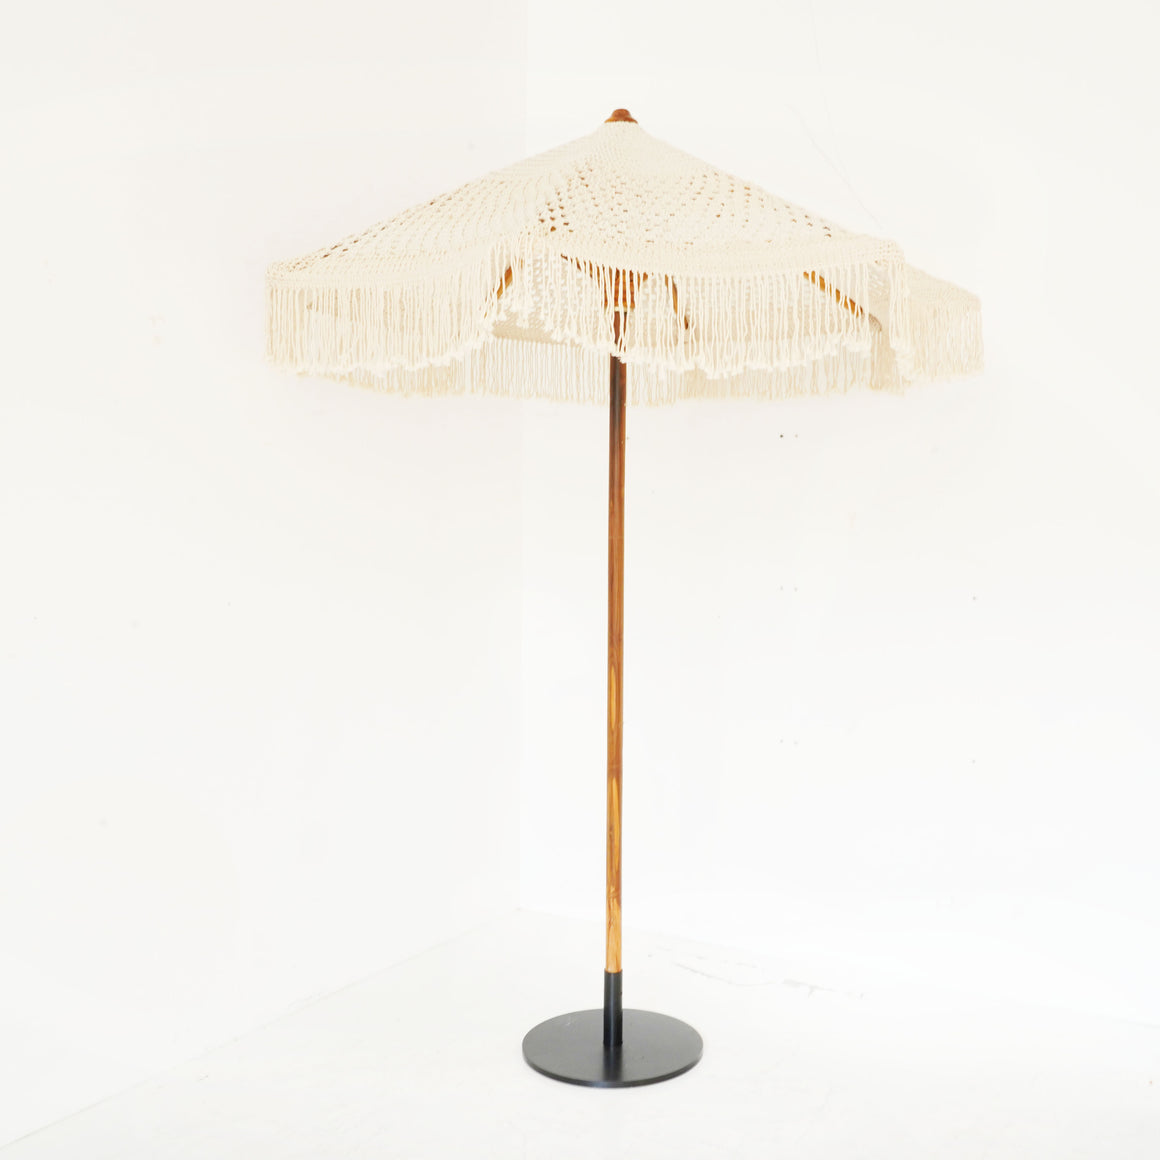 Albertine Macrame Umbrella with stand